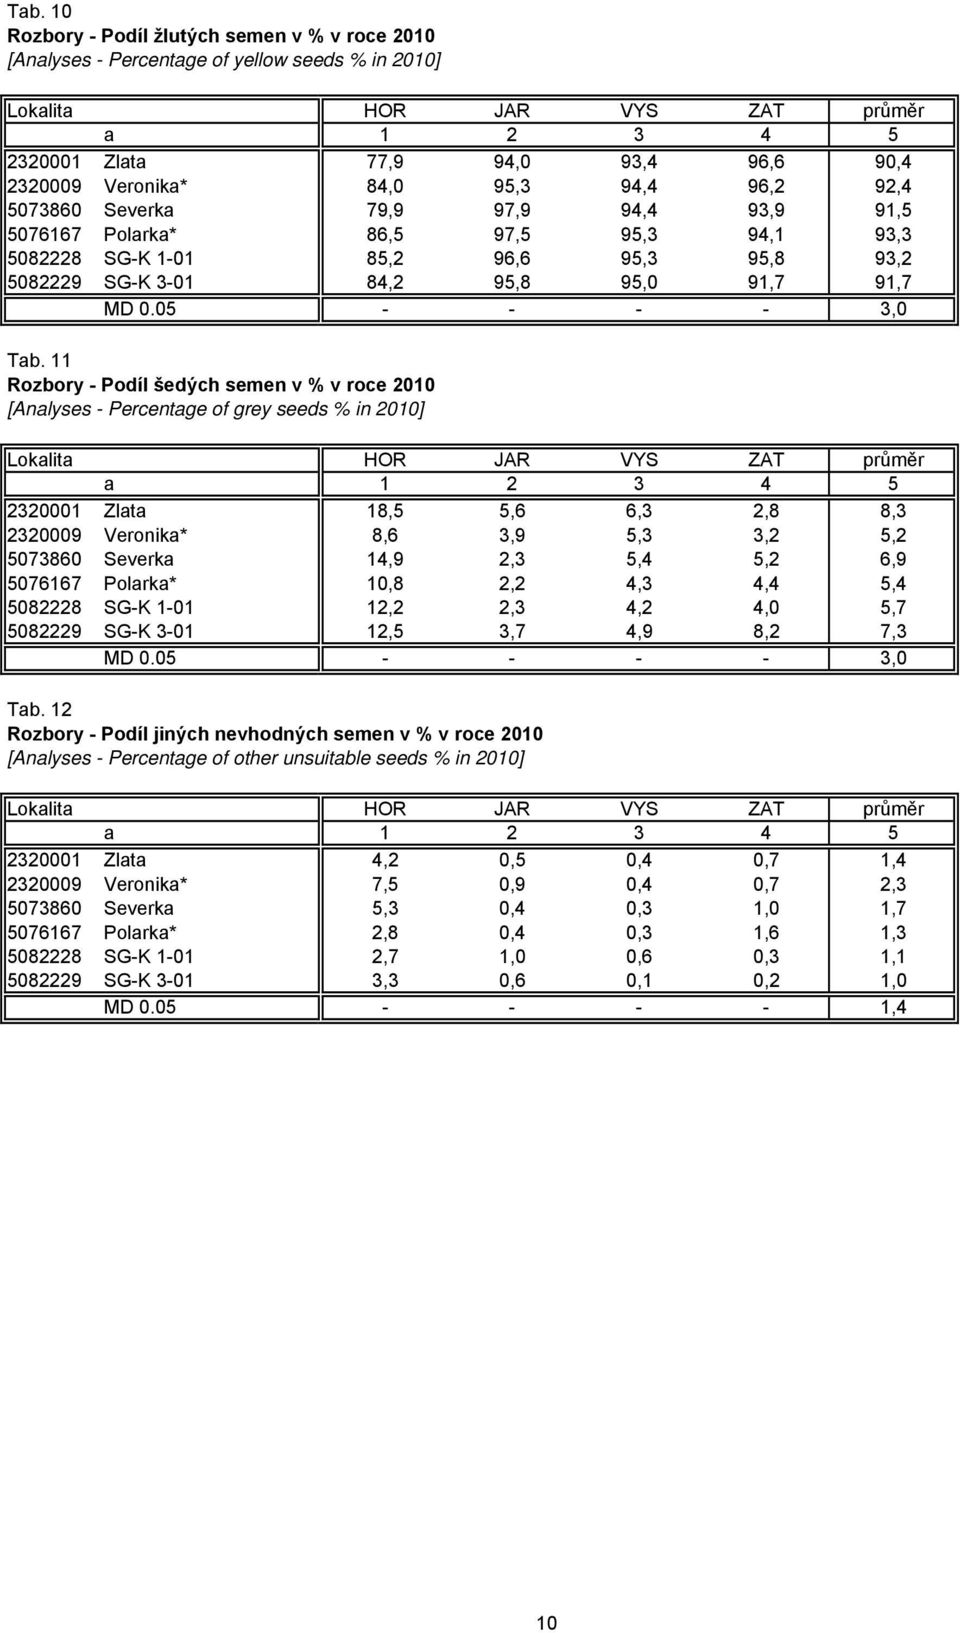 11 Rozbory - Podíl šedých semen v % v roce 2010 [Analyses - Percentage of grey seeds % in 2010] 2320001 Zlata 18,5 5,6 6,3 2,8 8,3 2320009 Veronika* 8,6 3,9 5,3 3,2 5,2 5073860 Severka 14,9 2,3 5,4